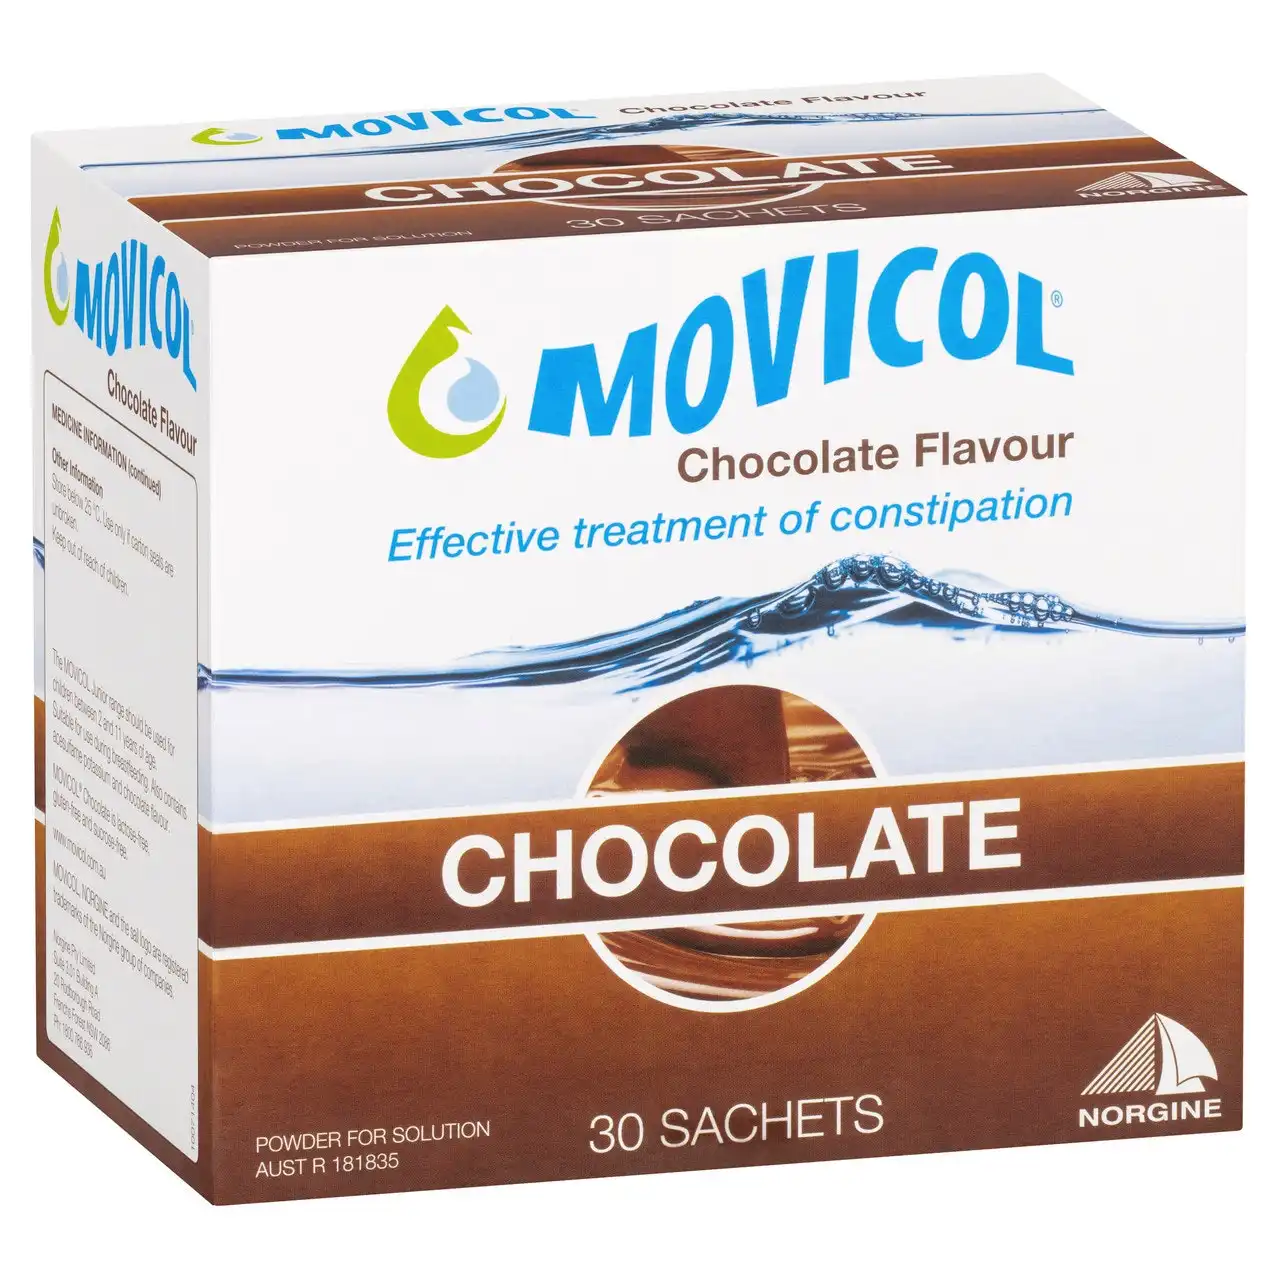 MOVICOL(r) Chocolate Flavour